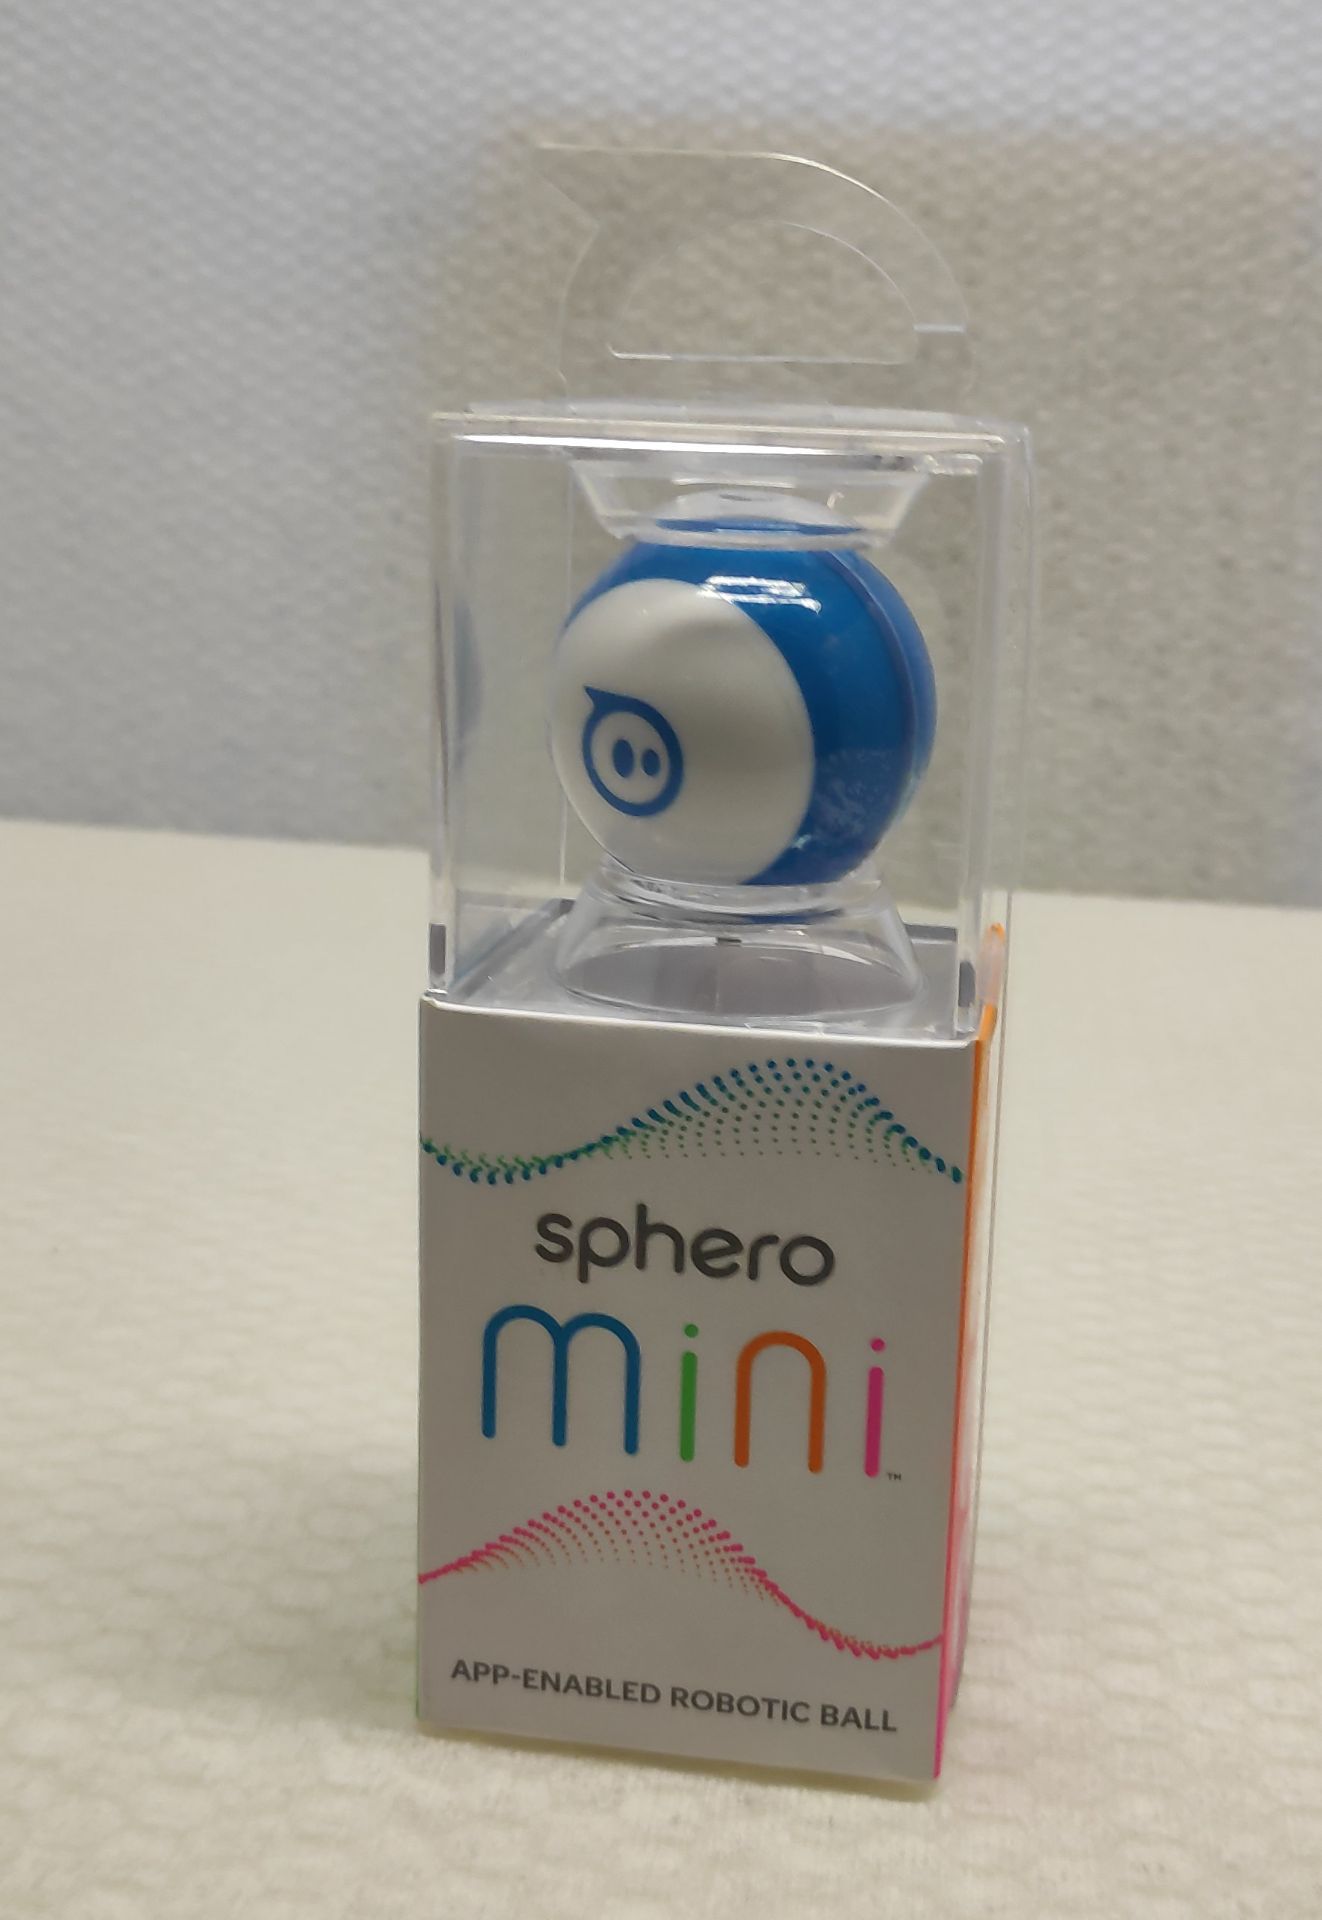 1 x Sphero Mini App-Enabled Robotic Ball - New/Boxed